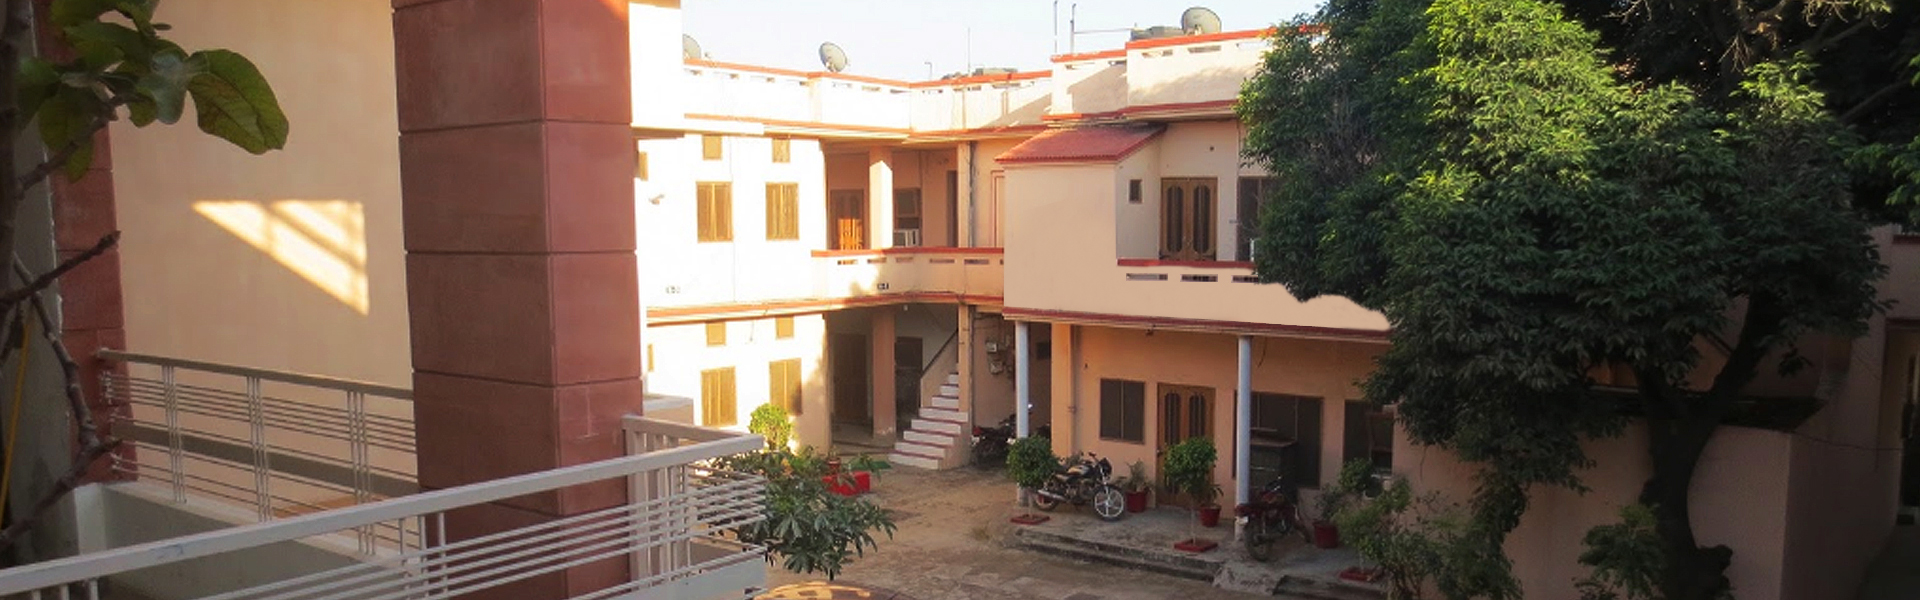 Best Guest House in Ludhiana